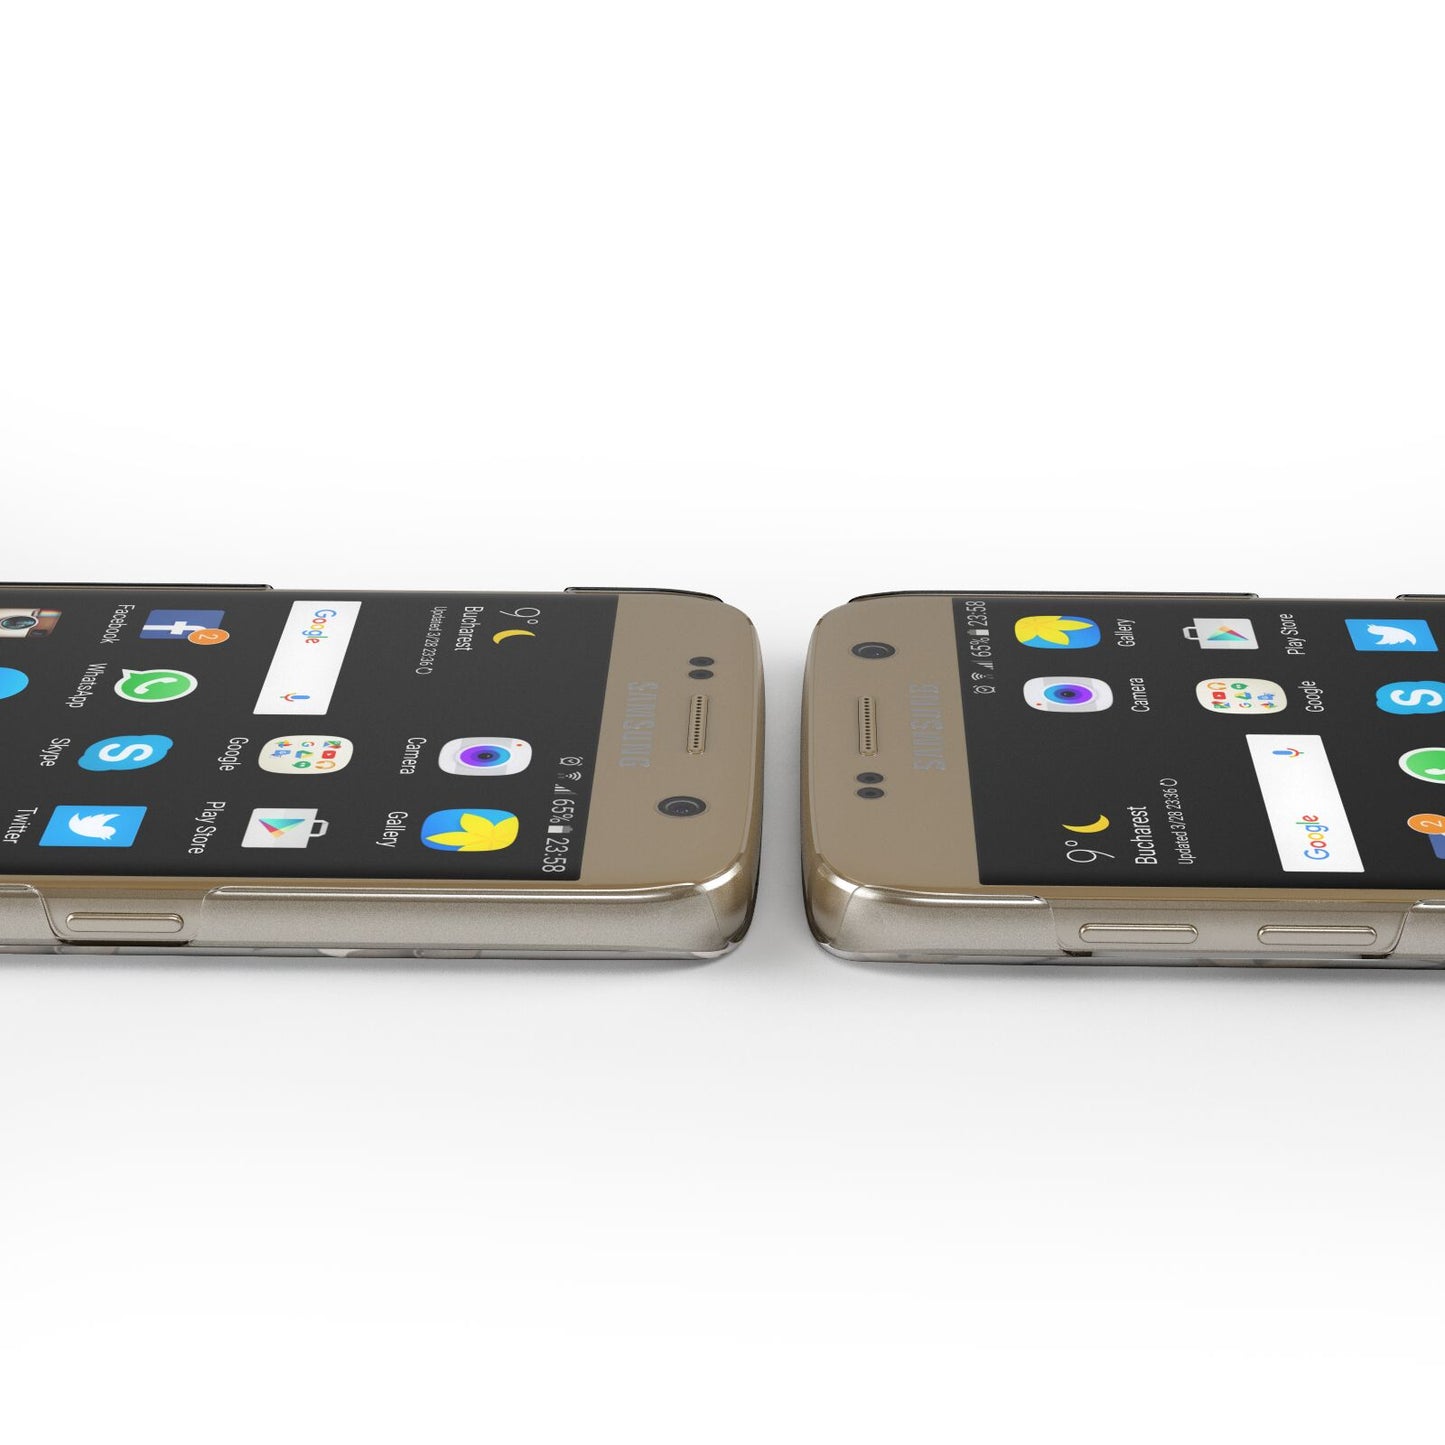 Boerboel Icon with Name Samsung Galaxy Case Ports Cutout